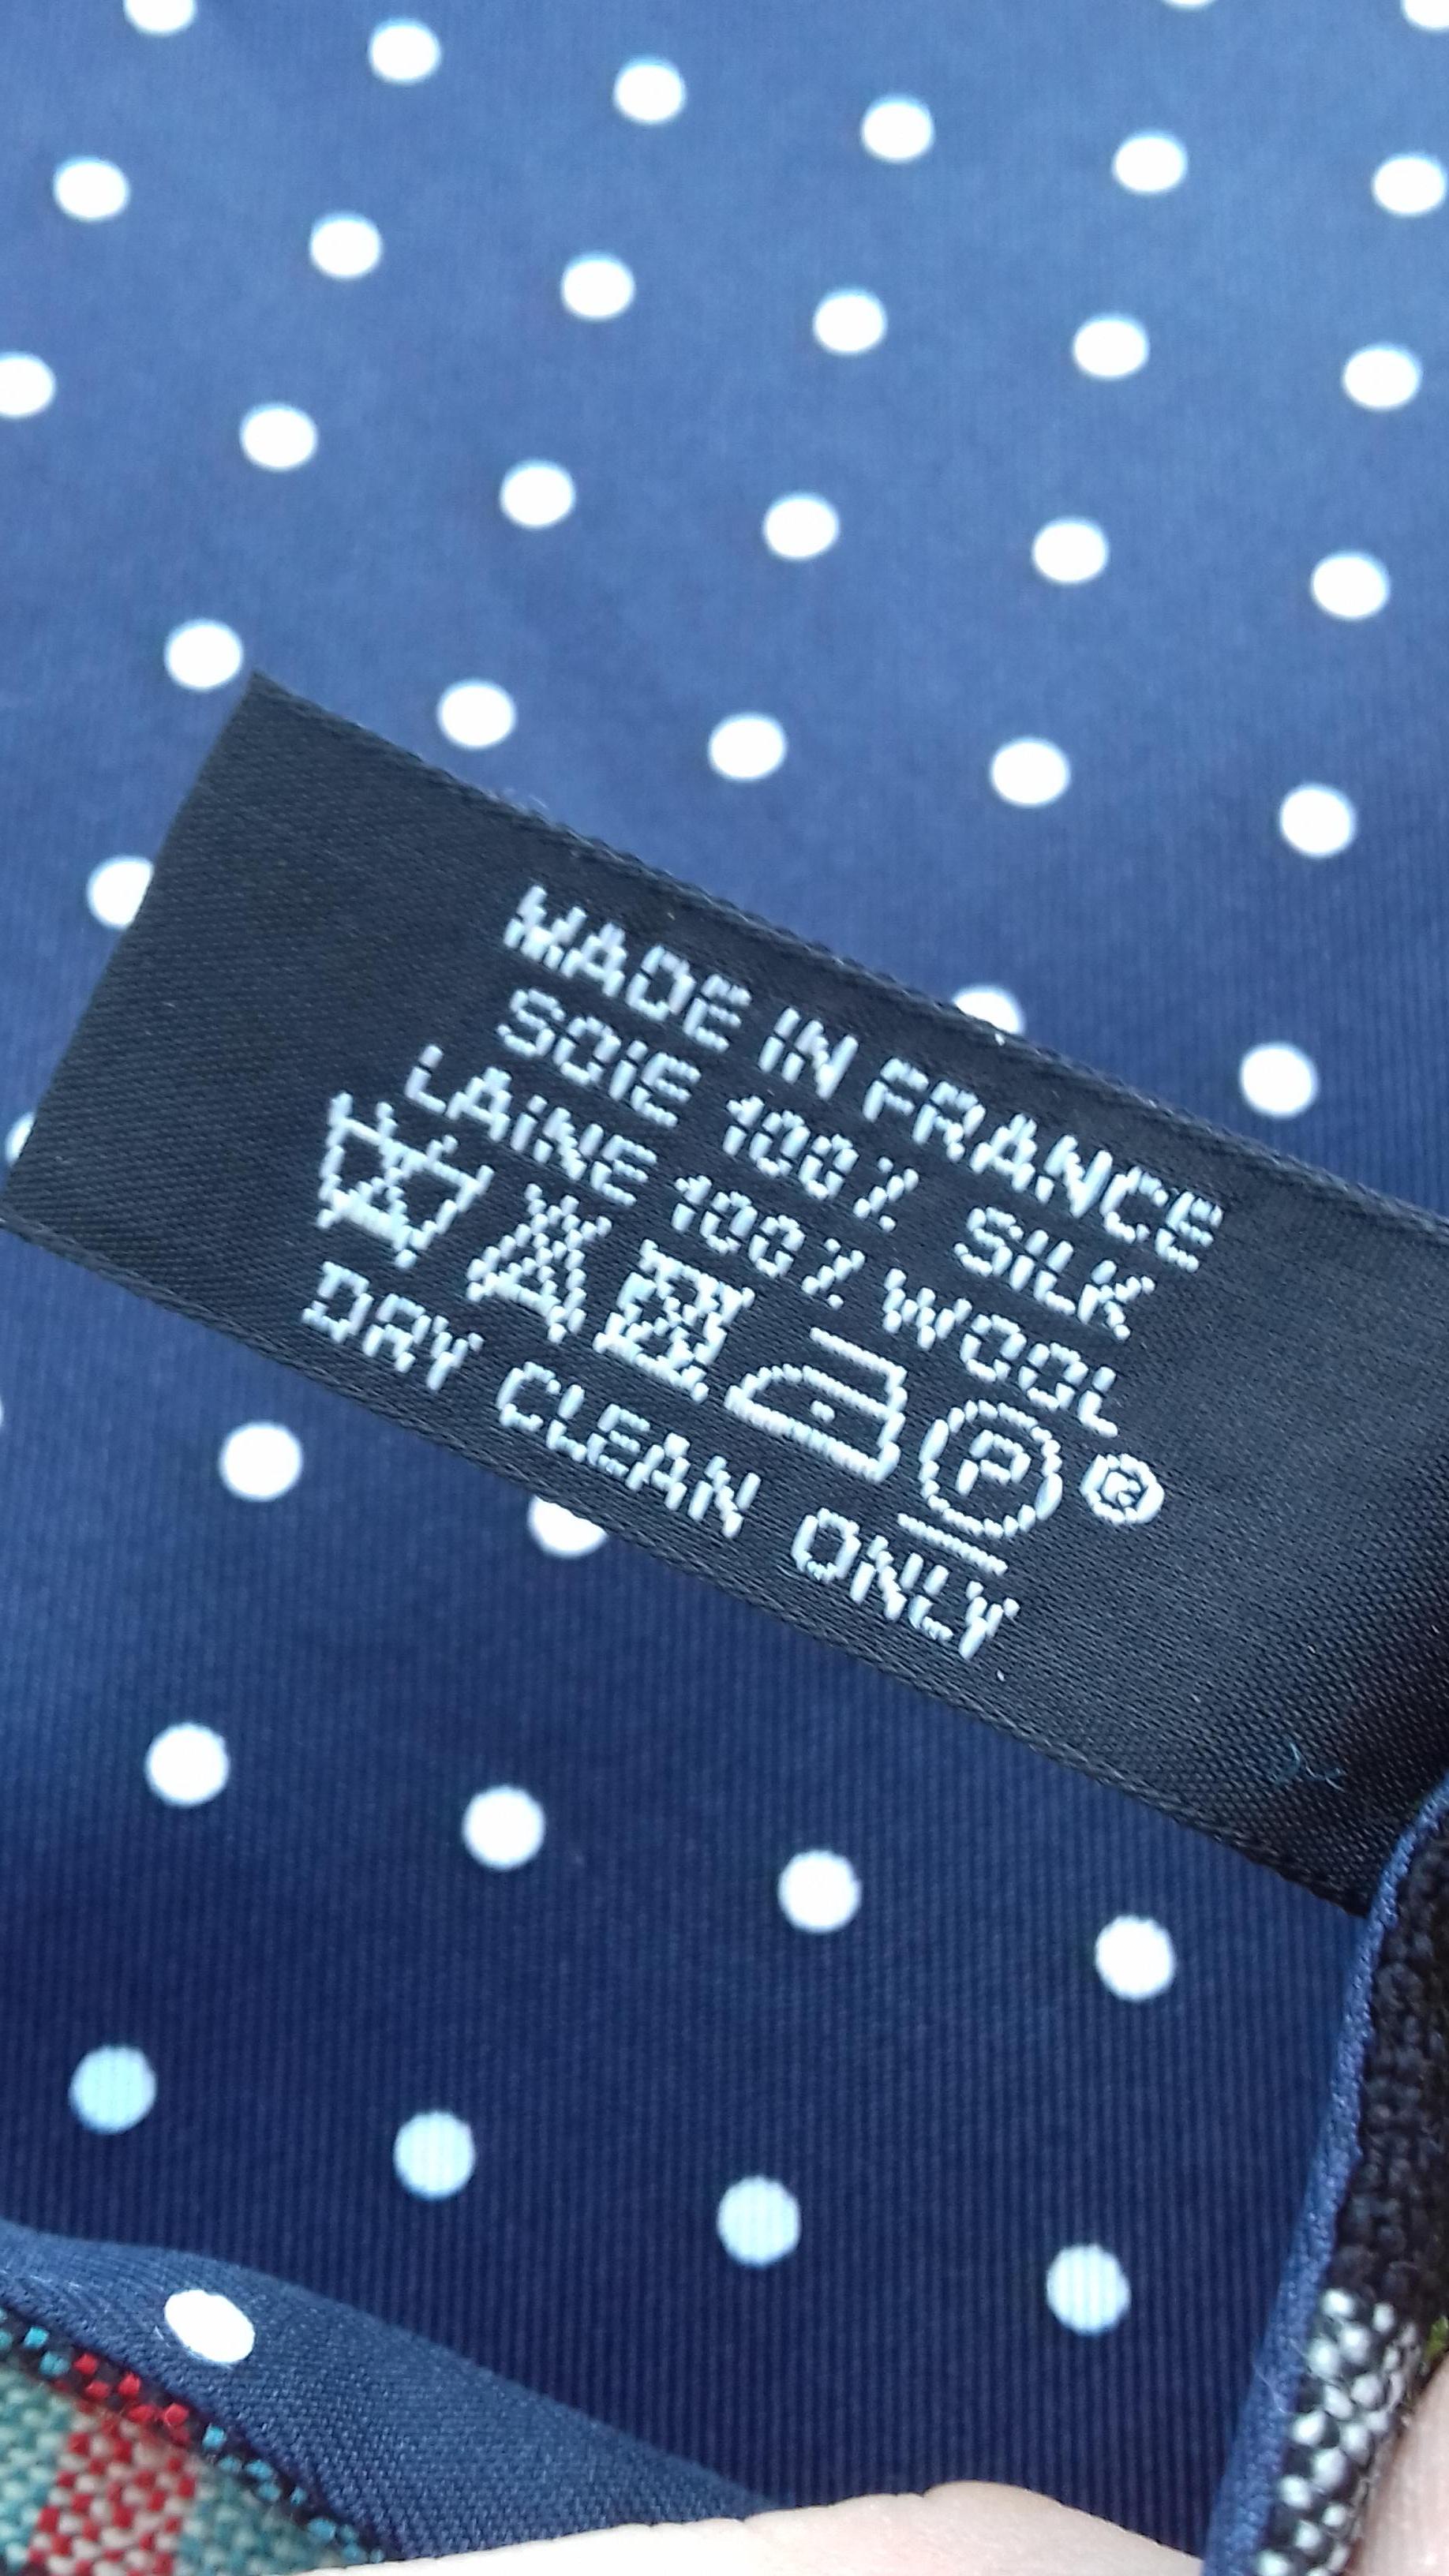 Hermès reversible Scarf Checked Tartan Wool and Polka Dots Silk 57 inches 1